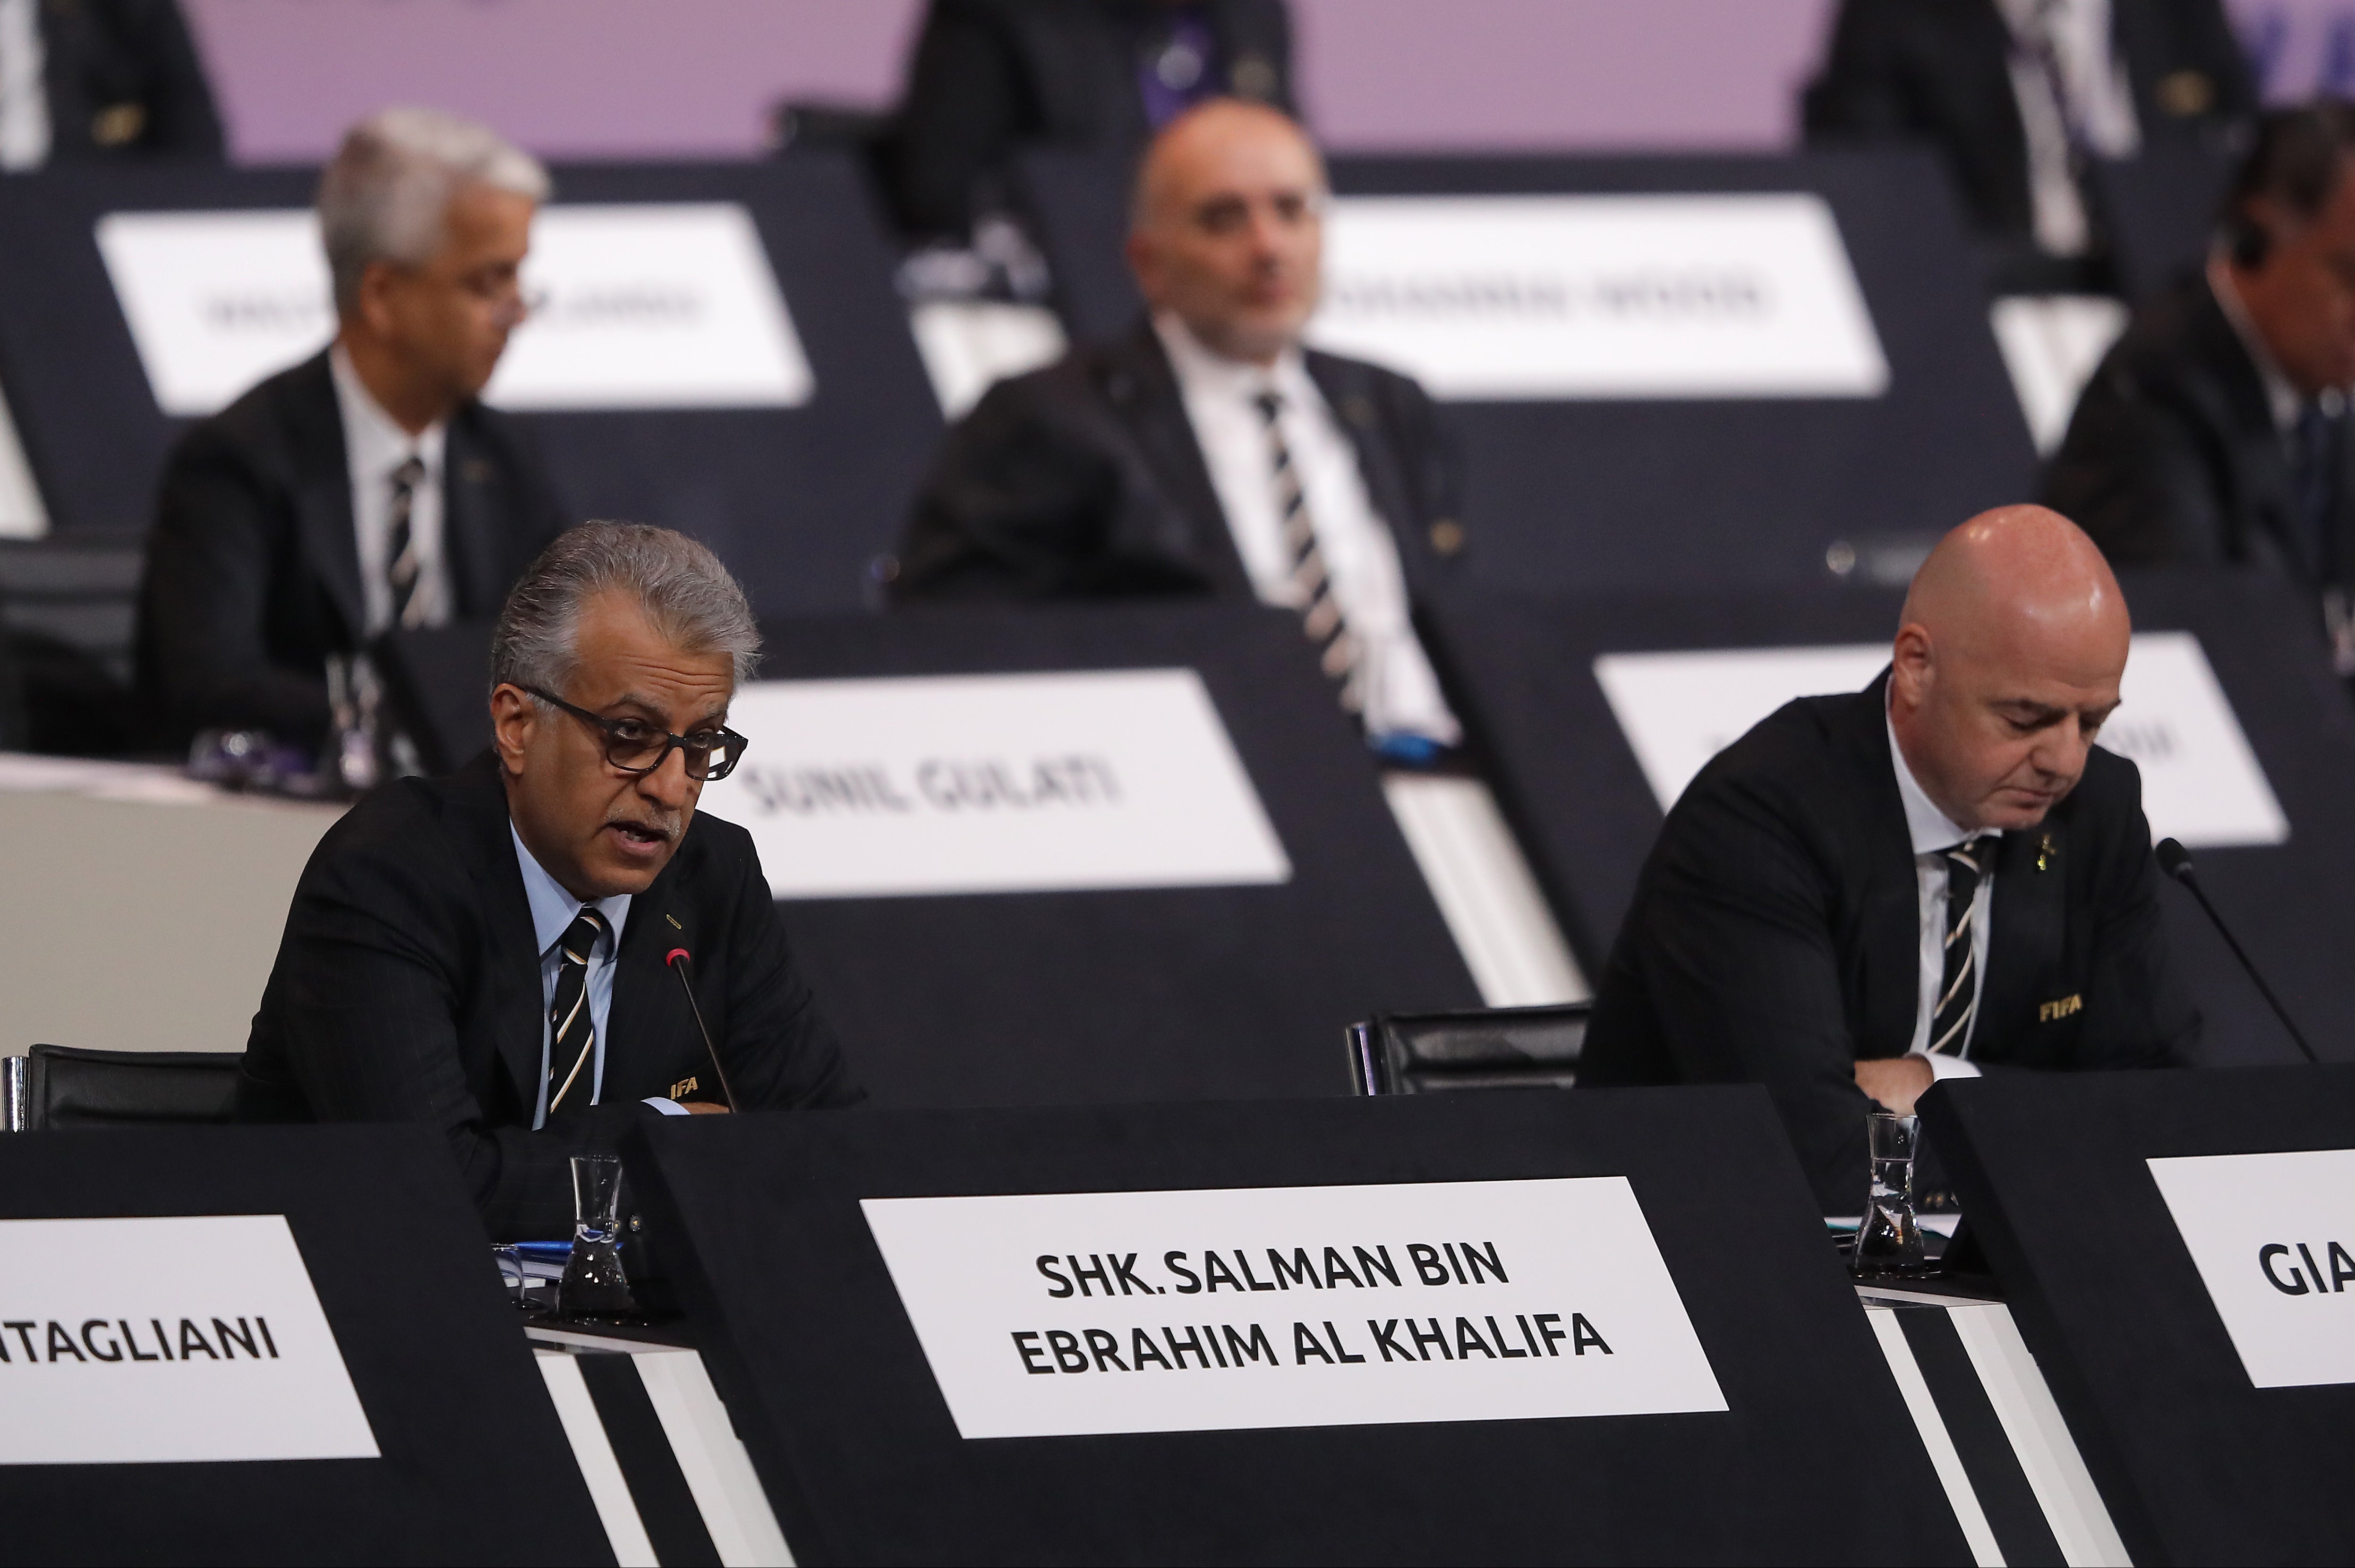 AFC president Salman Bin Ebrahim Al Khalifa has backed Palestine ahead of the Fifa Congress